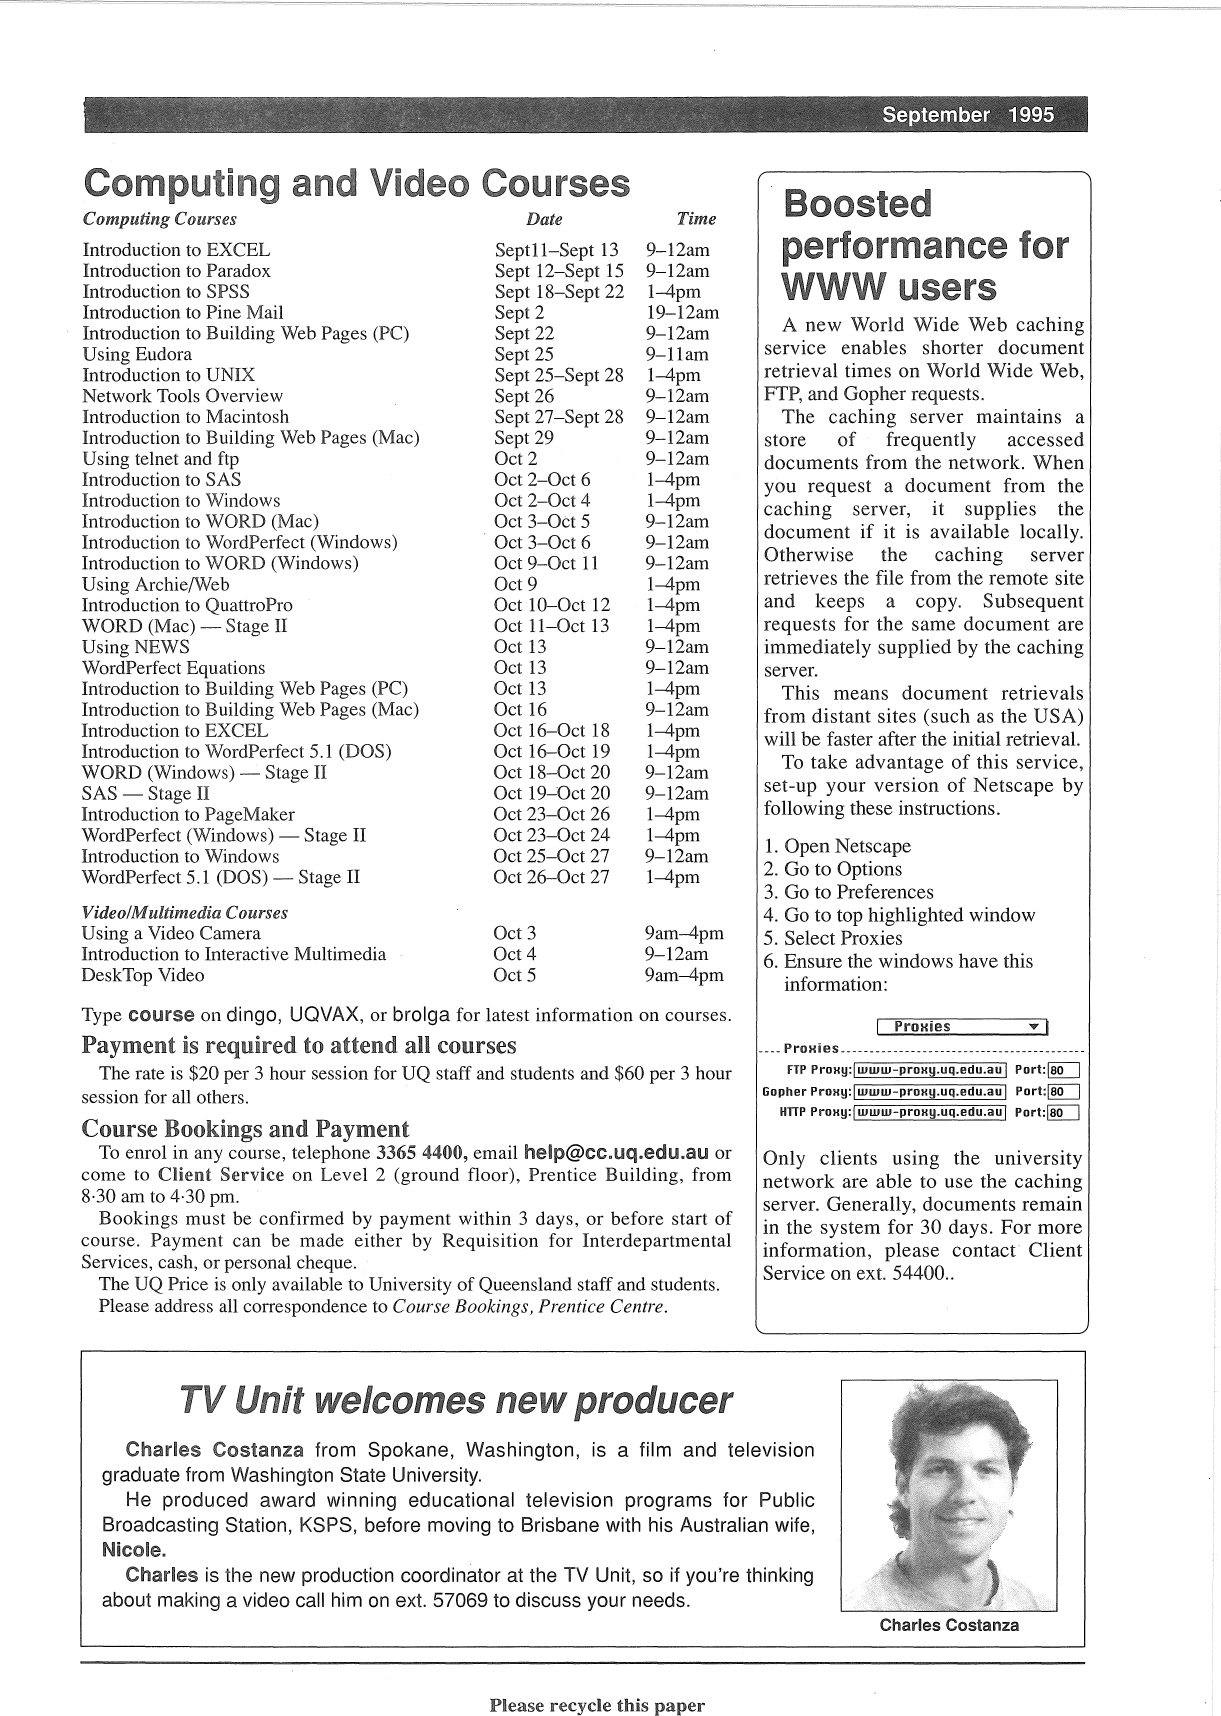 Page 2 of 2 - Prentice Centre Bulletin Number 56, September 1995